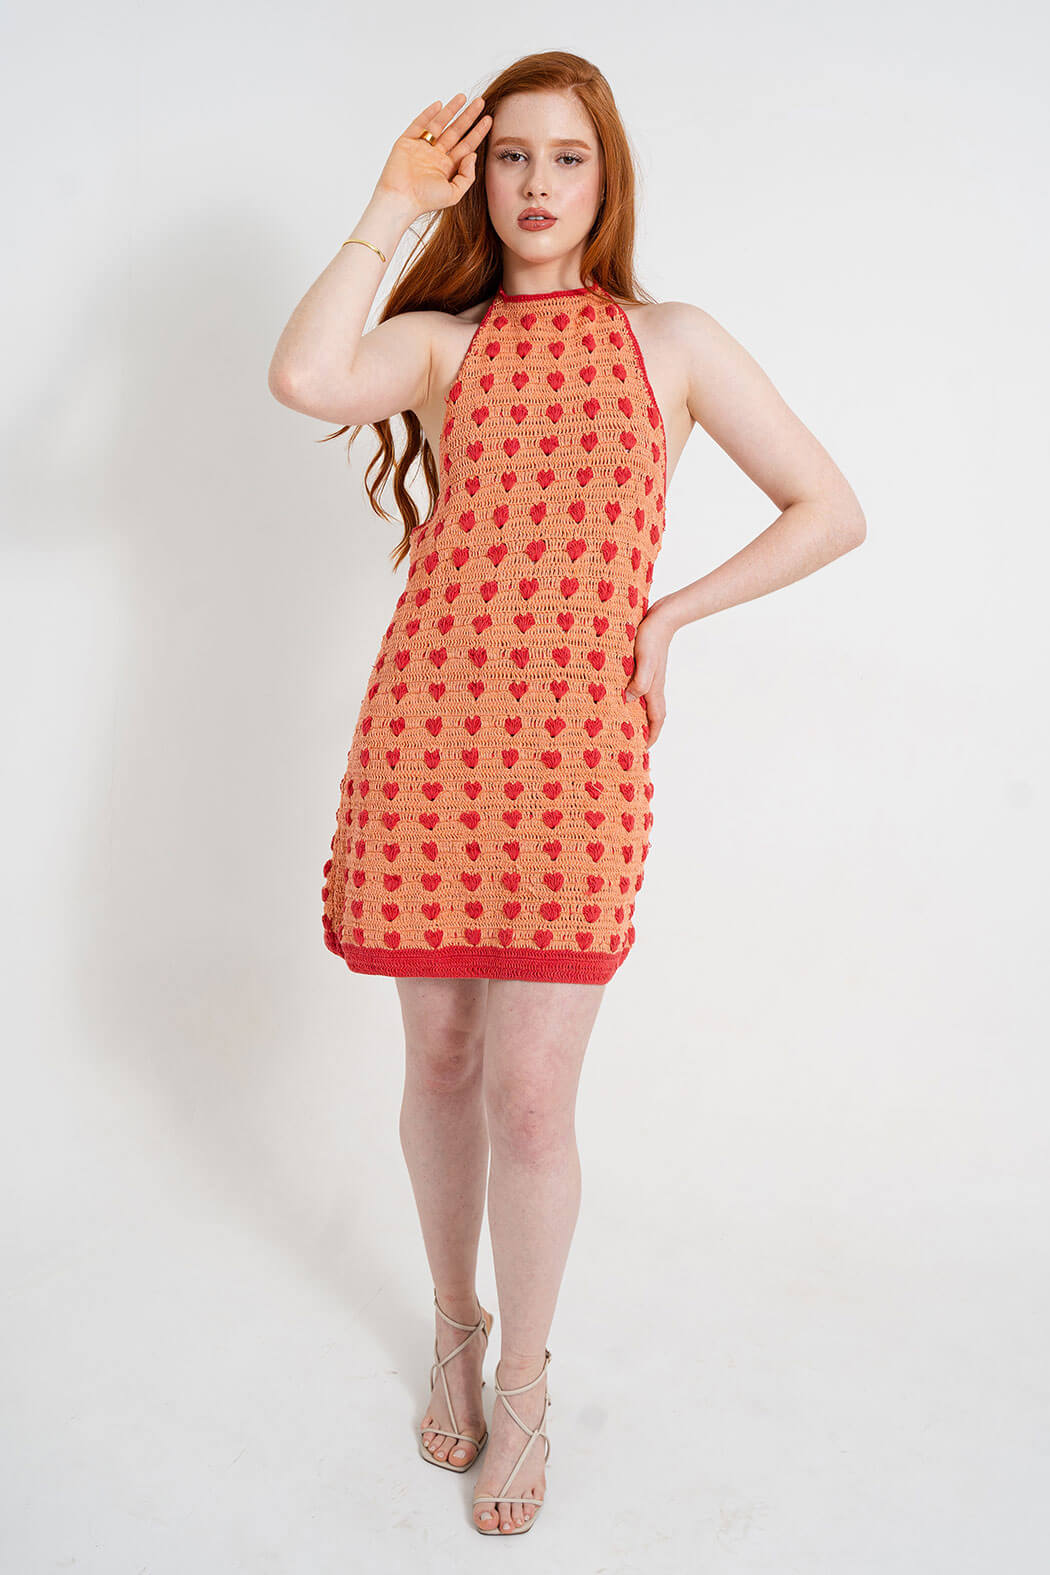 Amores Crochet Mini Dress by Hess